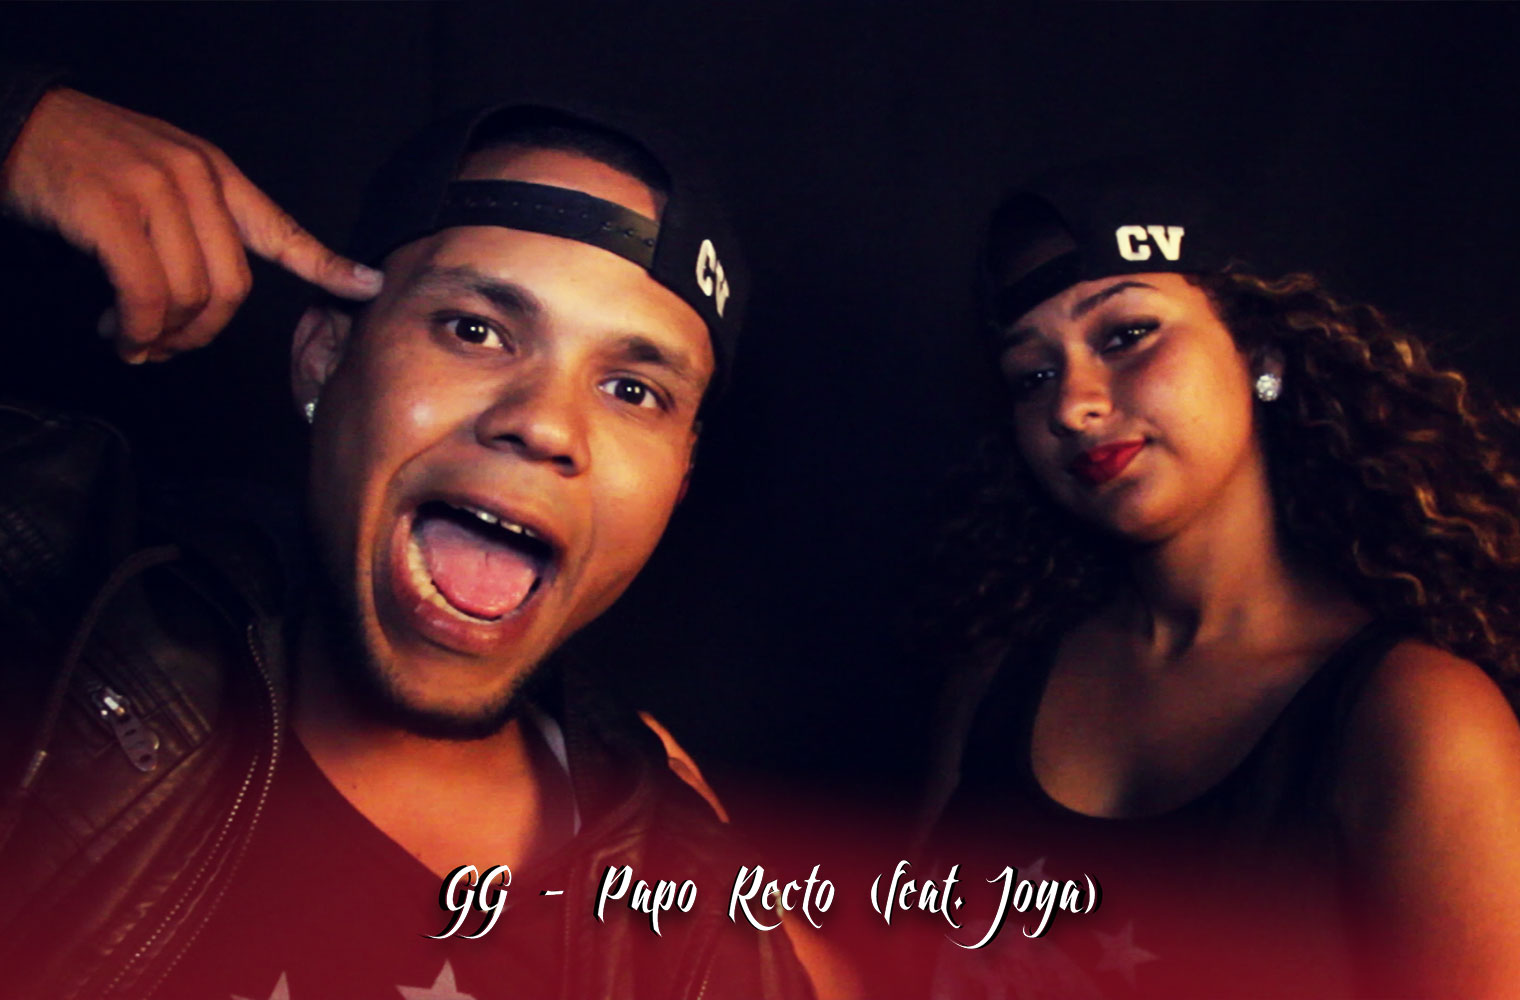 GG - PAPO RECTO (Feat. JOYA)